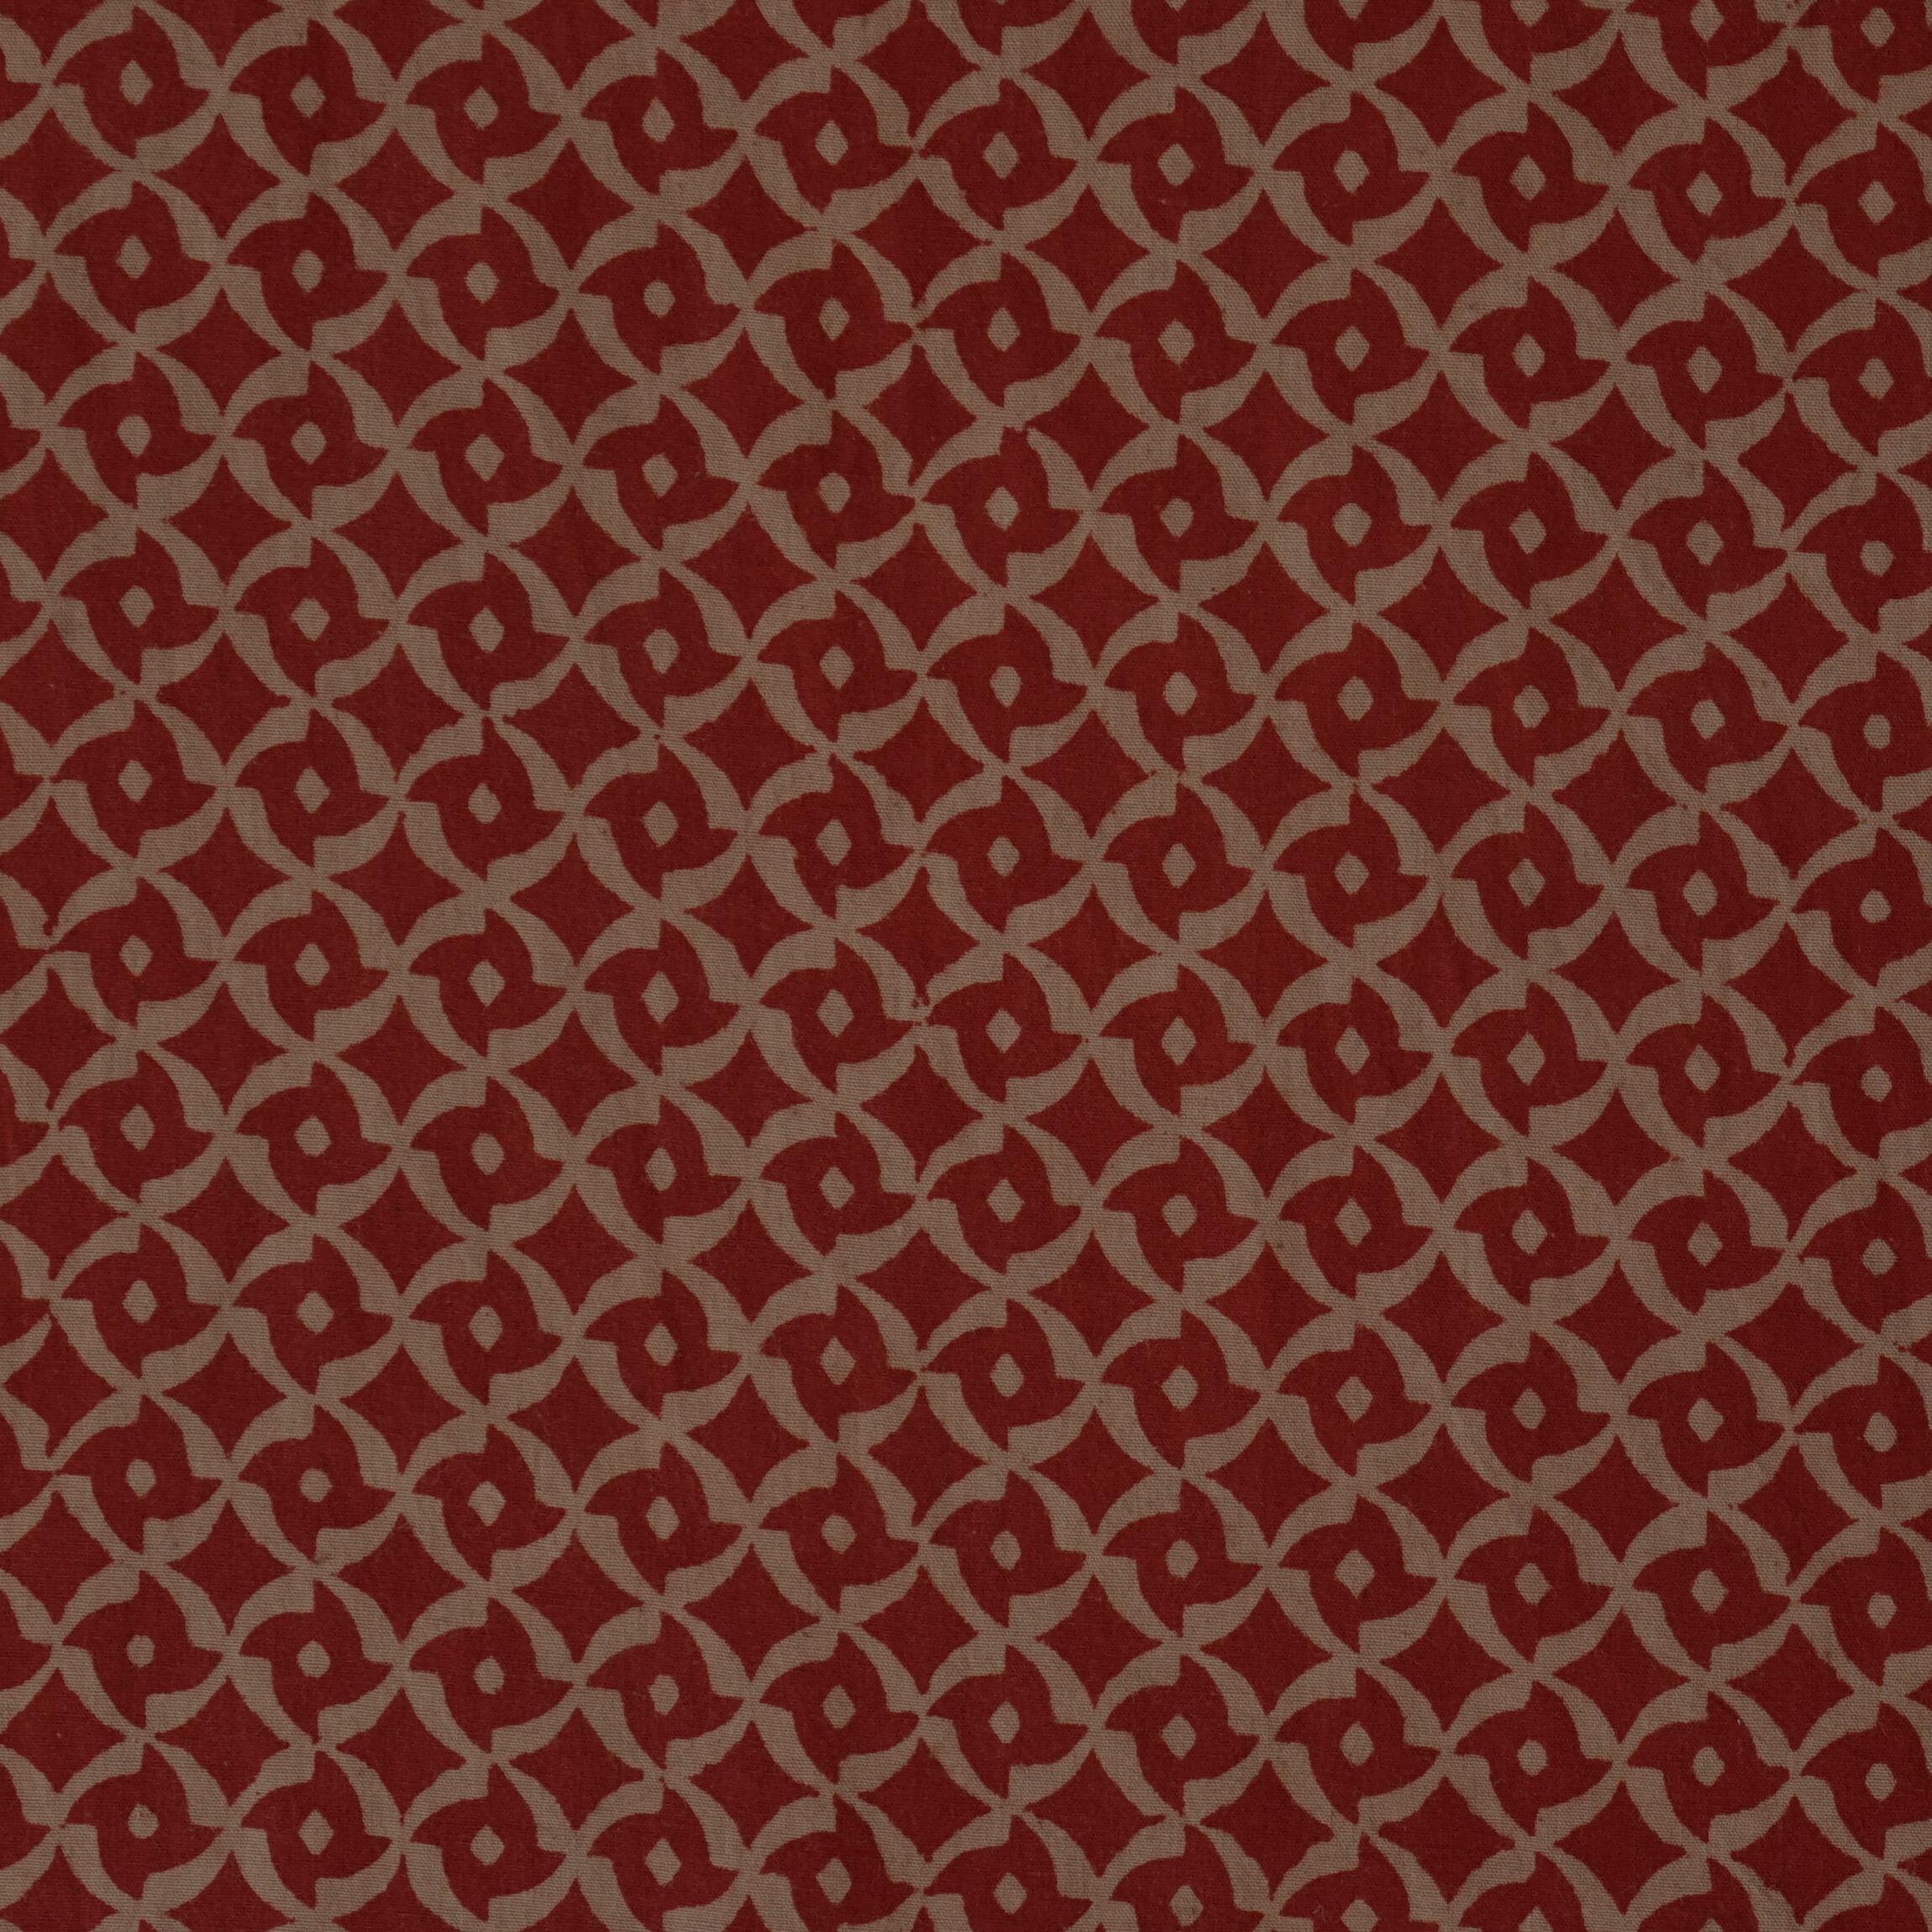 100% Block-Printed Cotton Fabric From India- Bagh - Alizarin Red & Indigosol Khaki - Wurfstern Origami Print - Flat